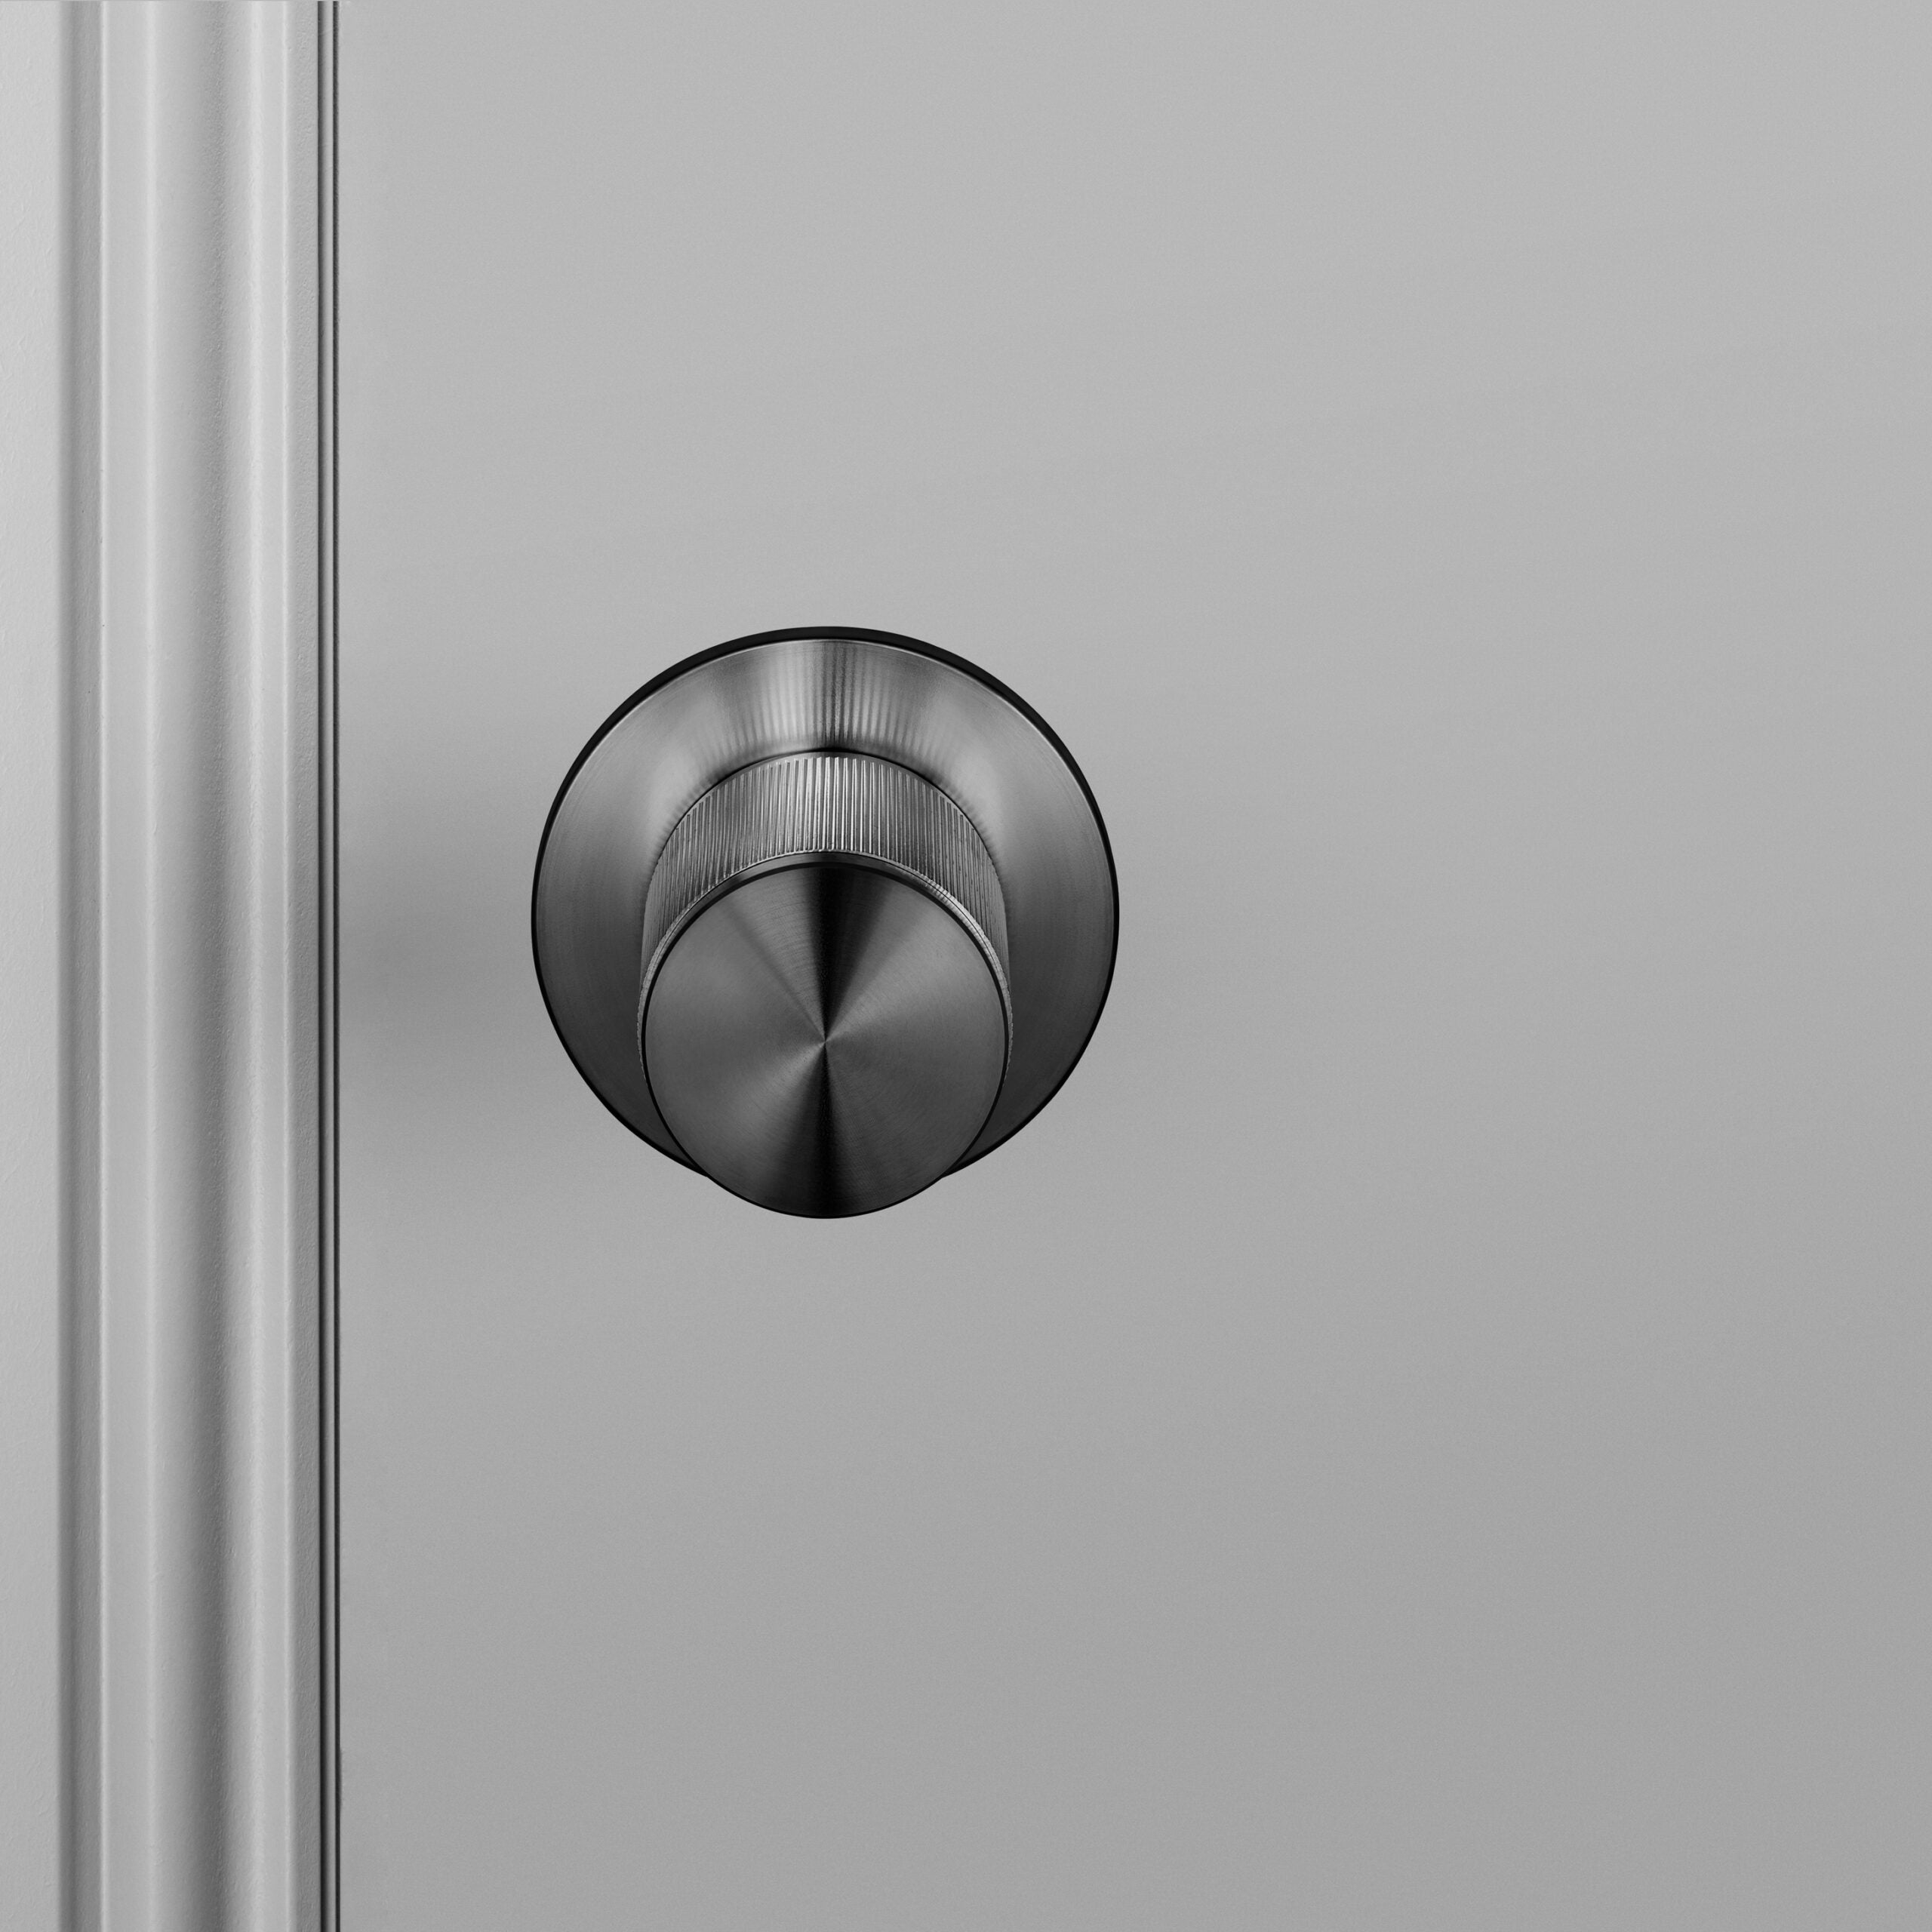 Buster + Punch Door Knob Set of 2, Linear Design, PASSAGE TYPE